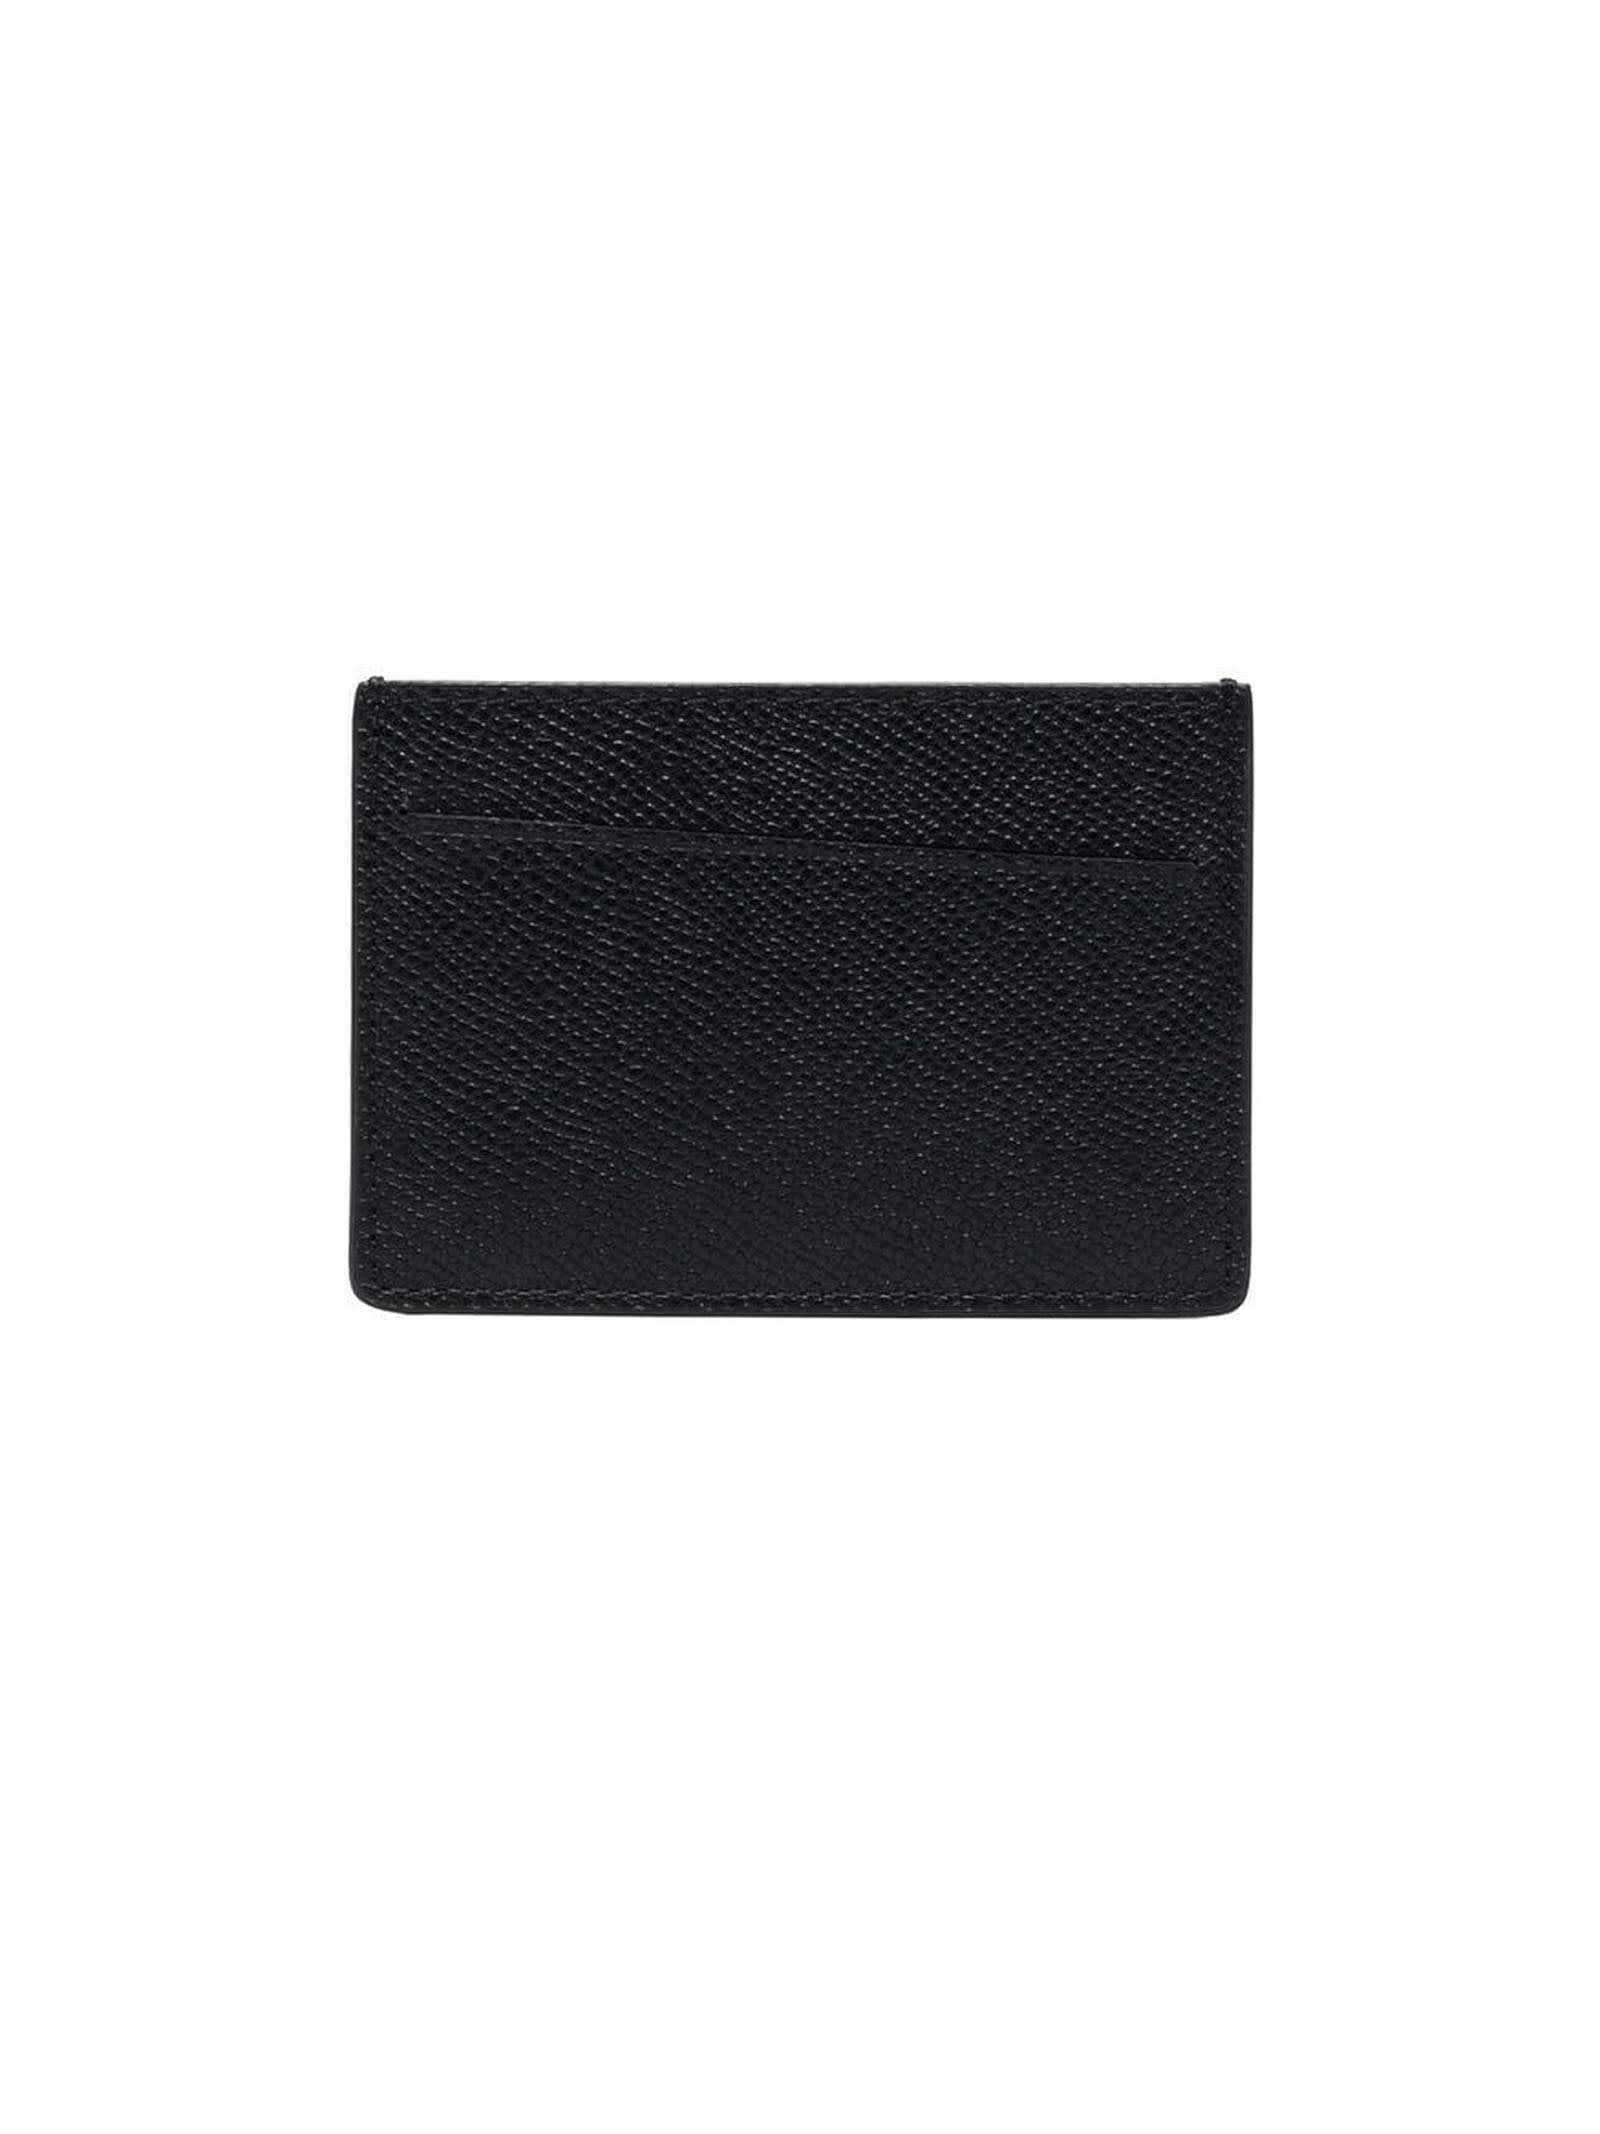 Maison Margiela Black Calf Leather Cardholder